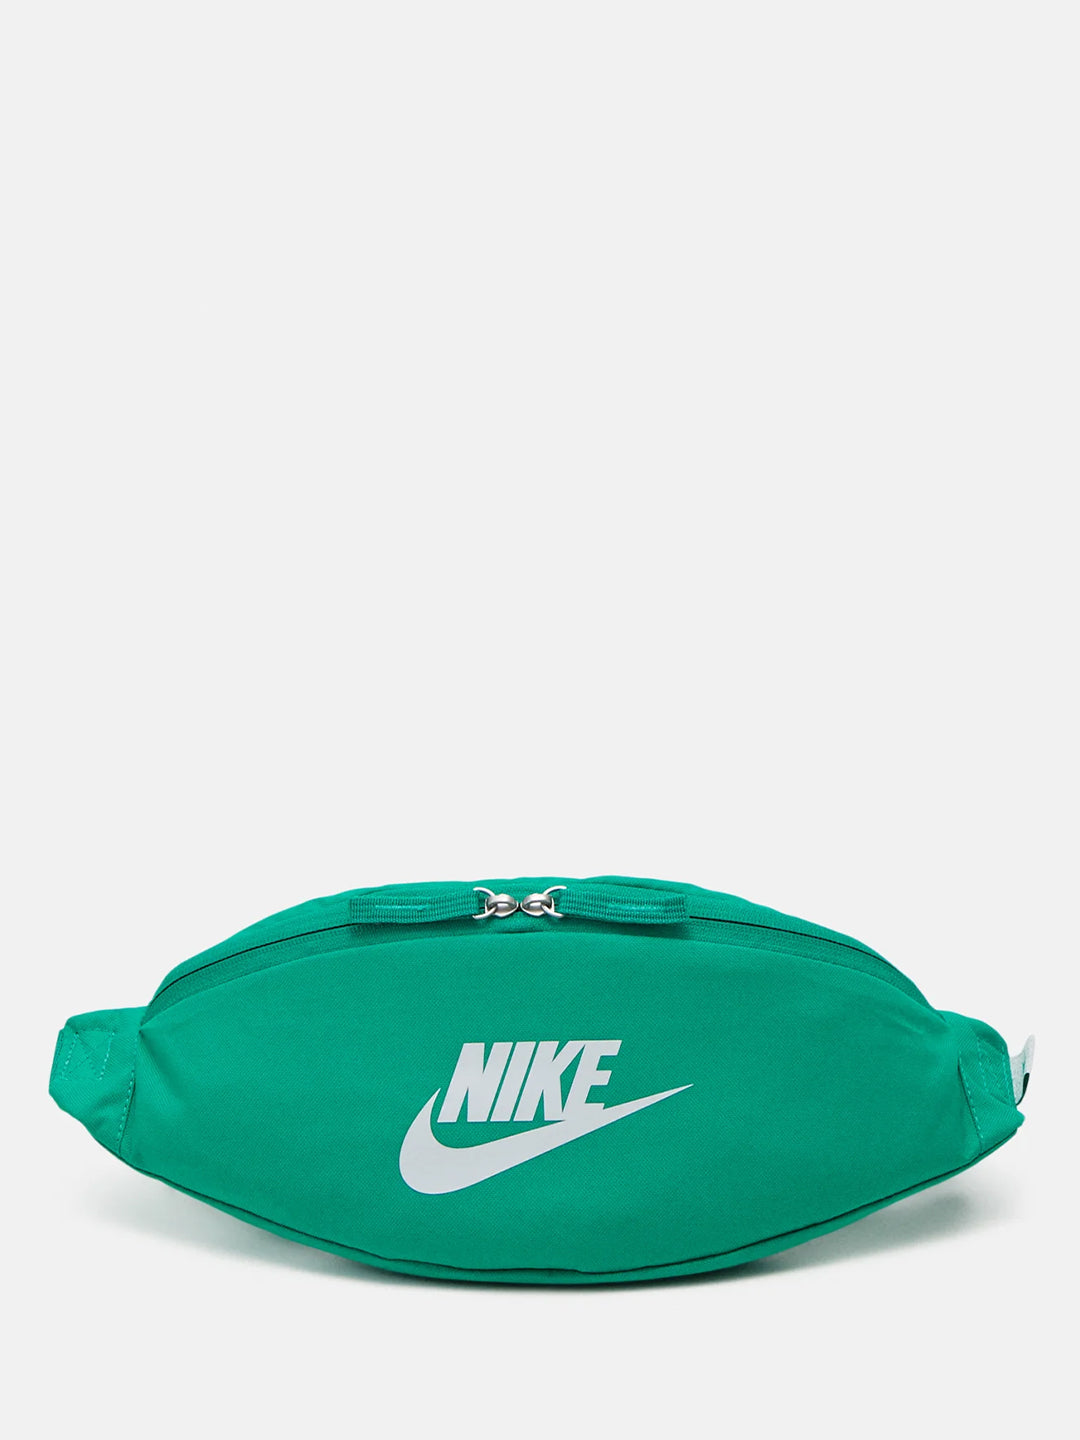 Nike marsupio Heritage verde con logo in contrasto